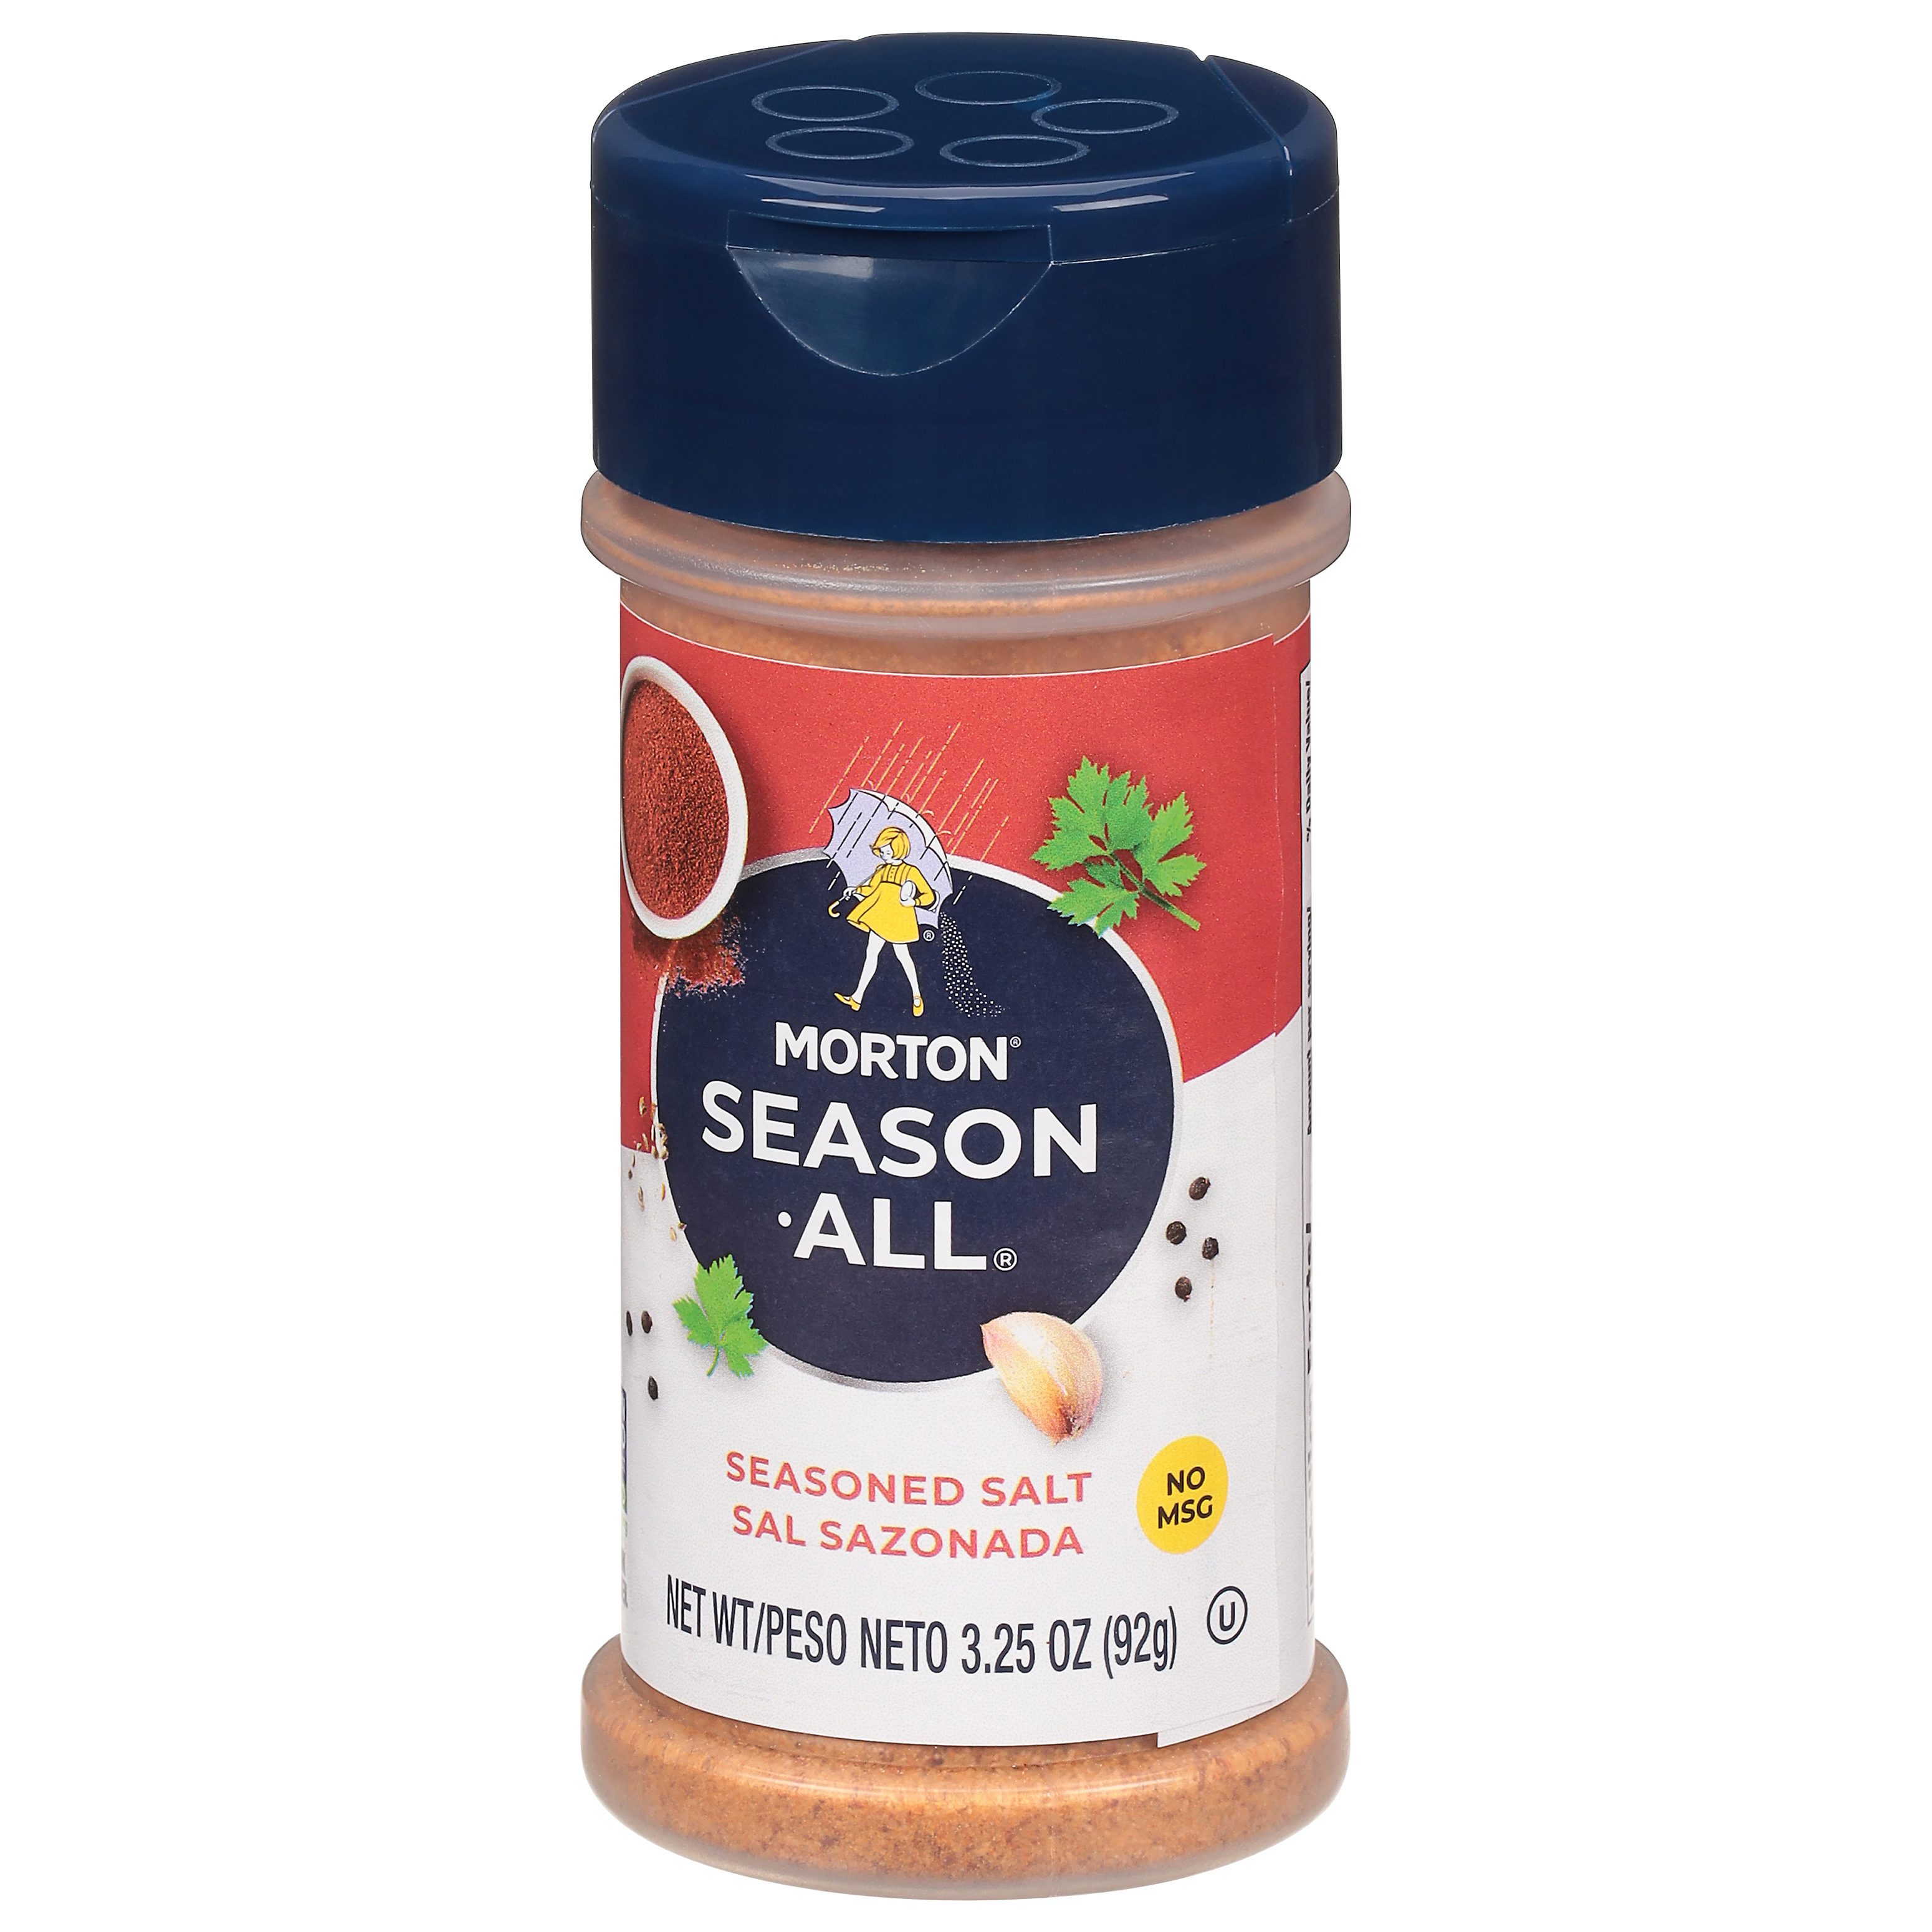  Morton Salt Season-All Seasoned Salt, 8 Ounce (Pack